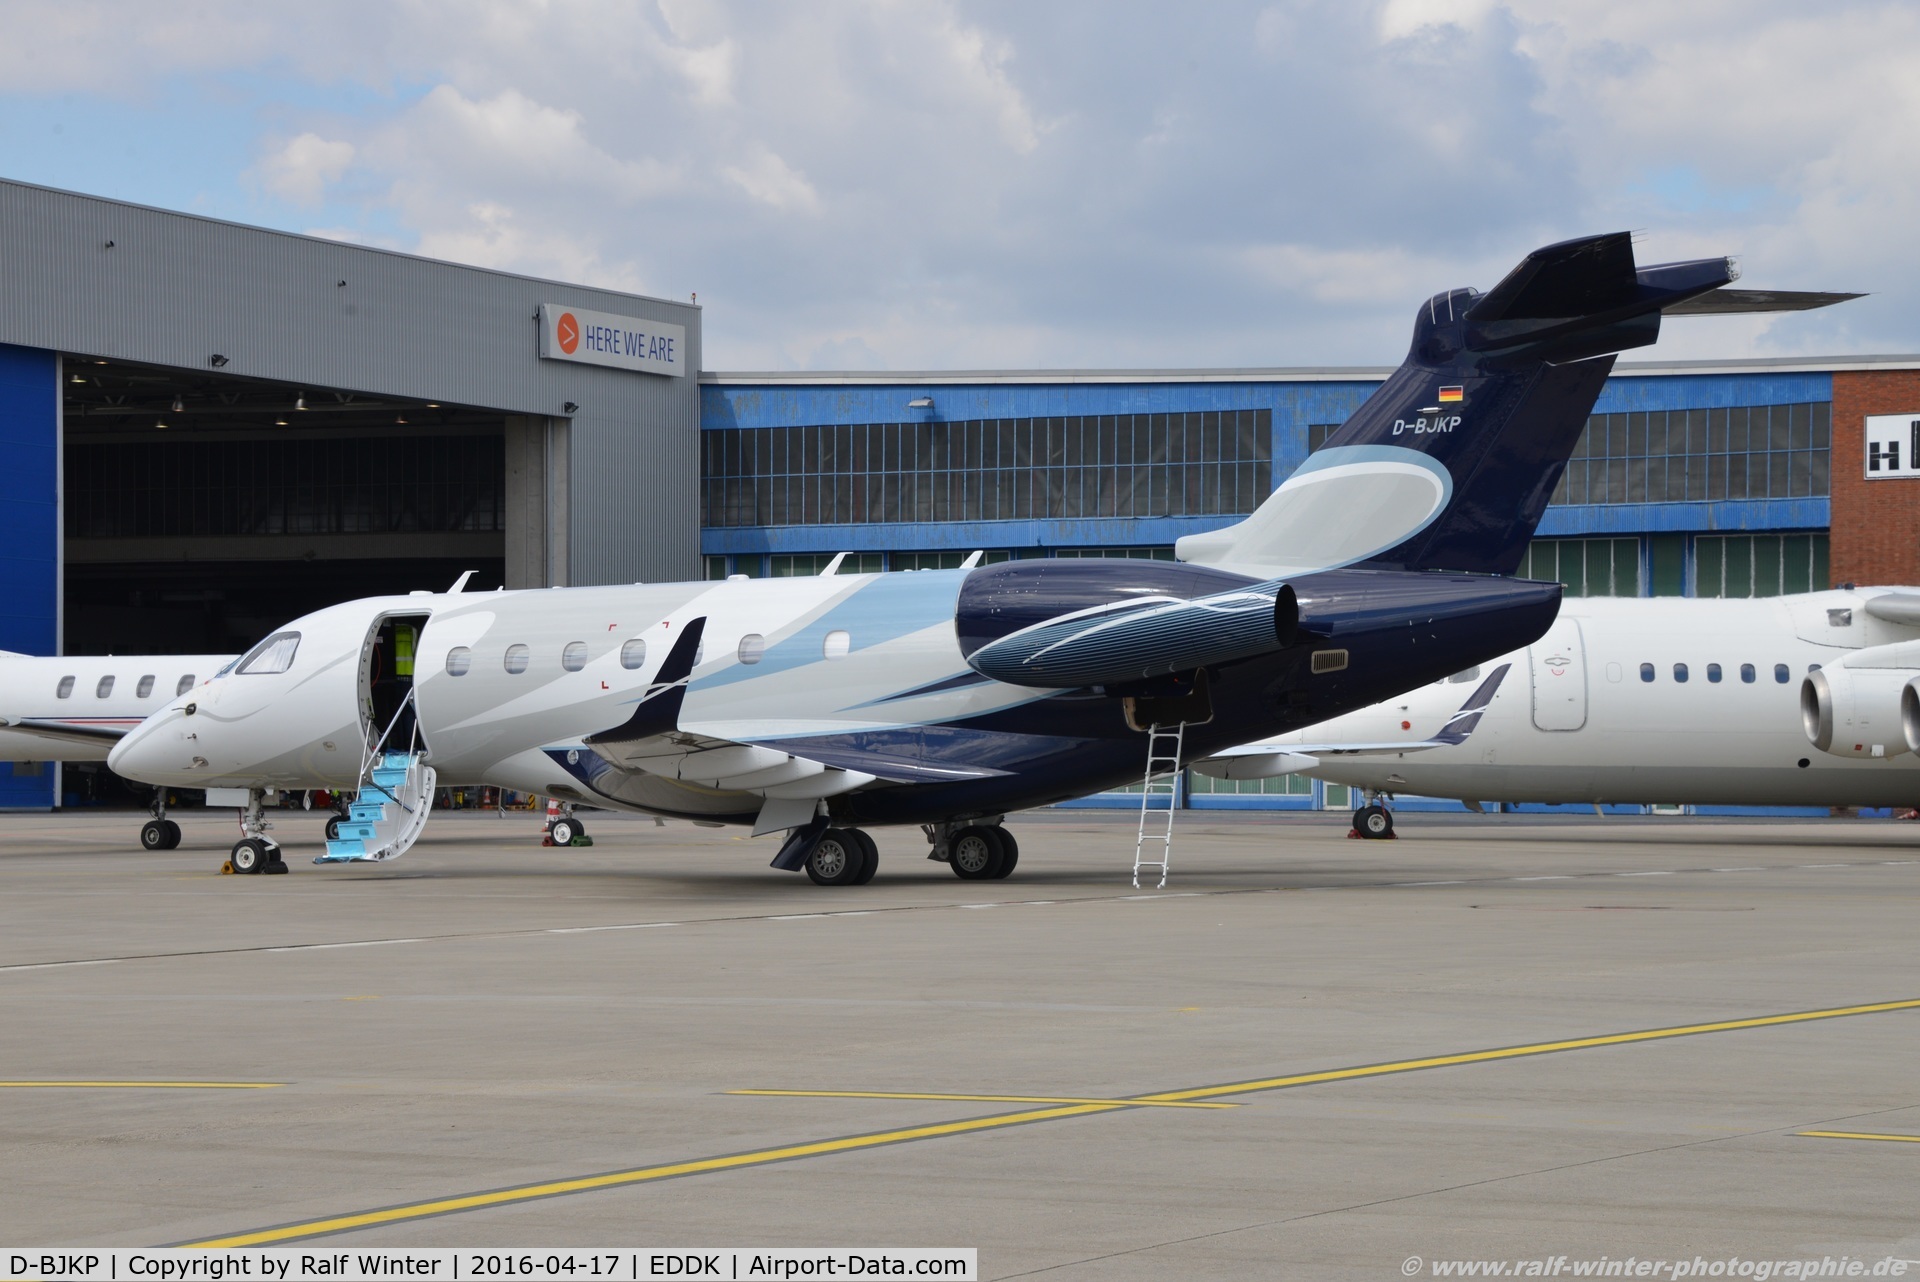 D-BJKP, 2012 Embraer EMB-550 Legacy 500 C/N 55000003, Embraer EMB-550 Legacy 500 - Elite Jet Service GmbH - 5500003 - D-BJKP - 17.04.2016 - CGN